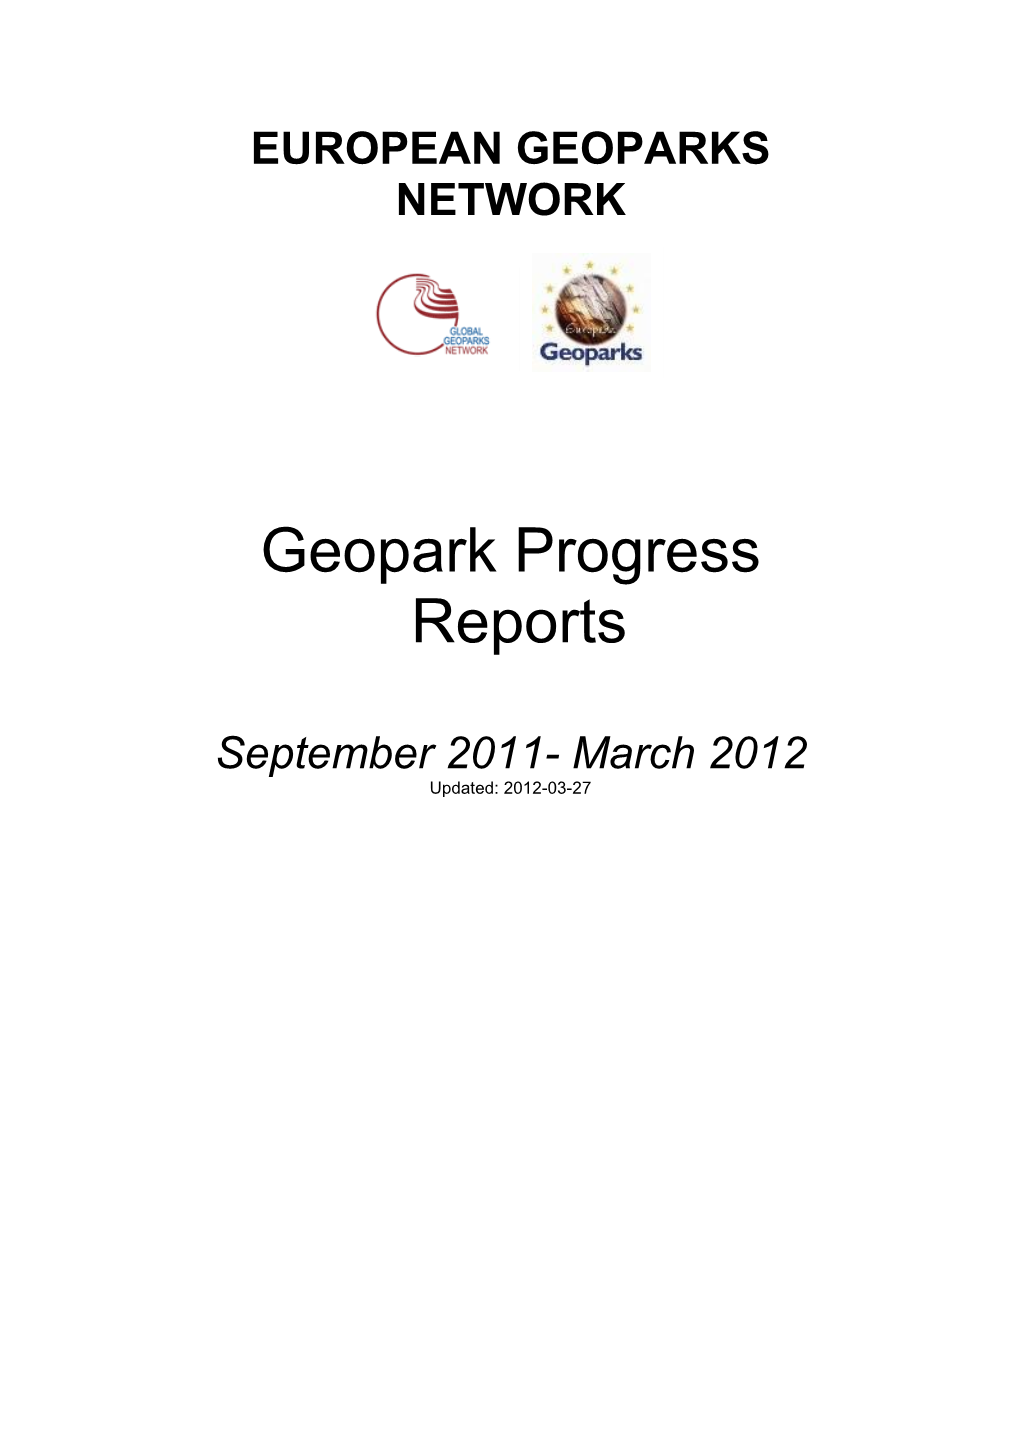 Geopark Progress Reports